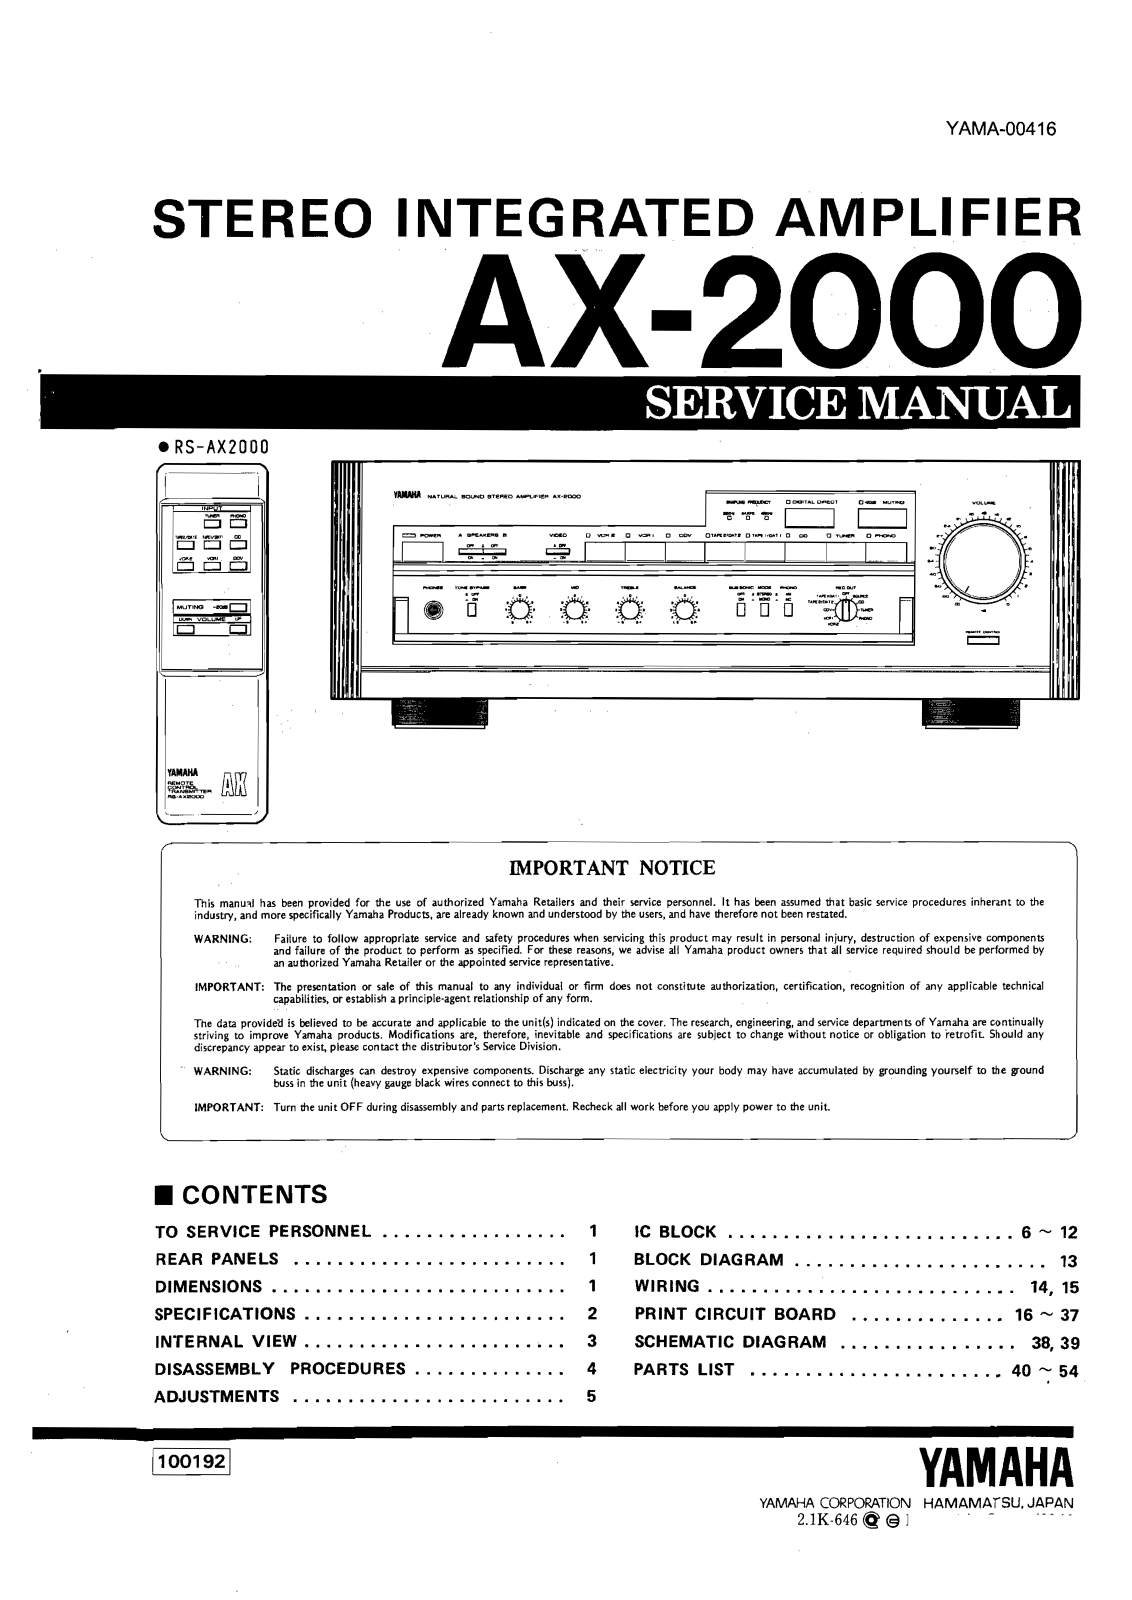 Yamaha AX-2000 Service Manual